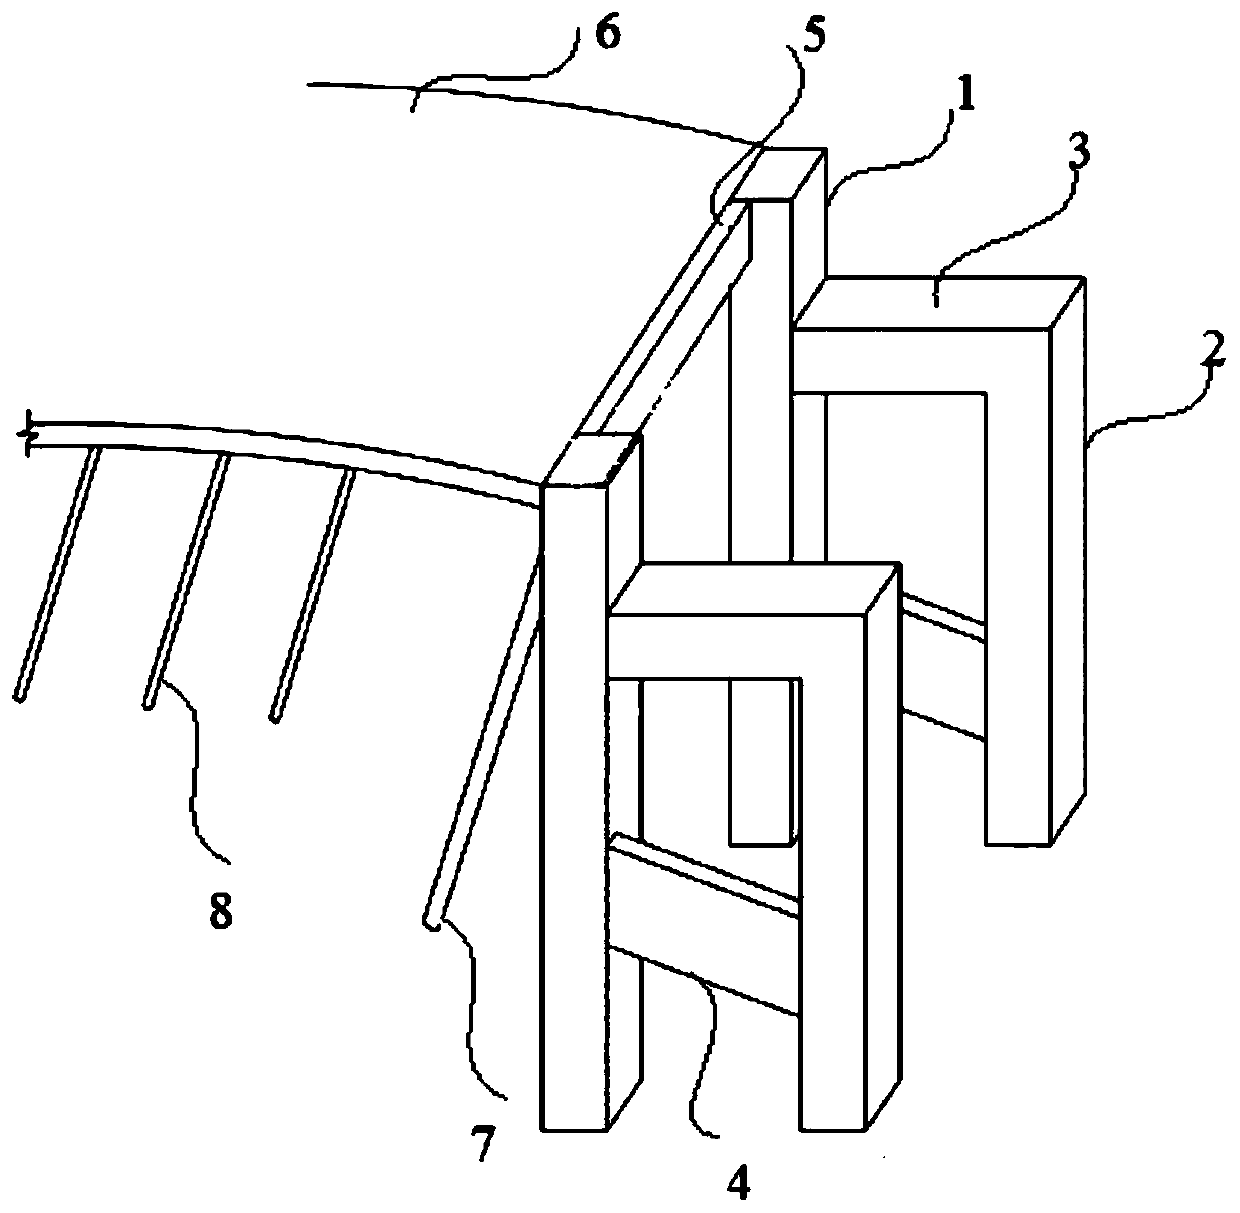 Anti-sliding structure